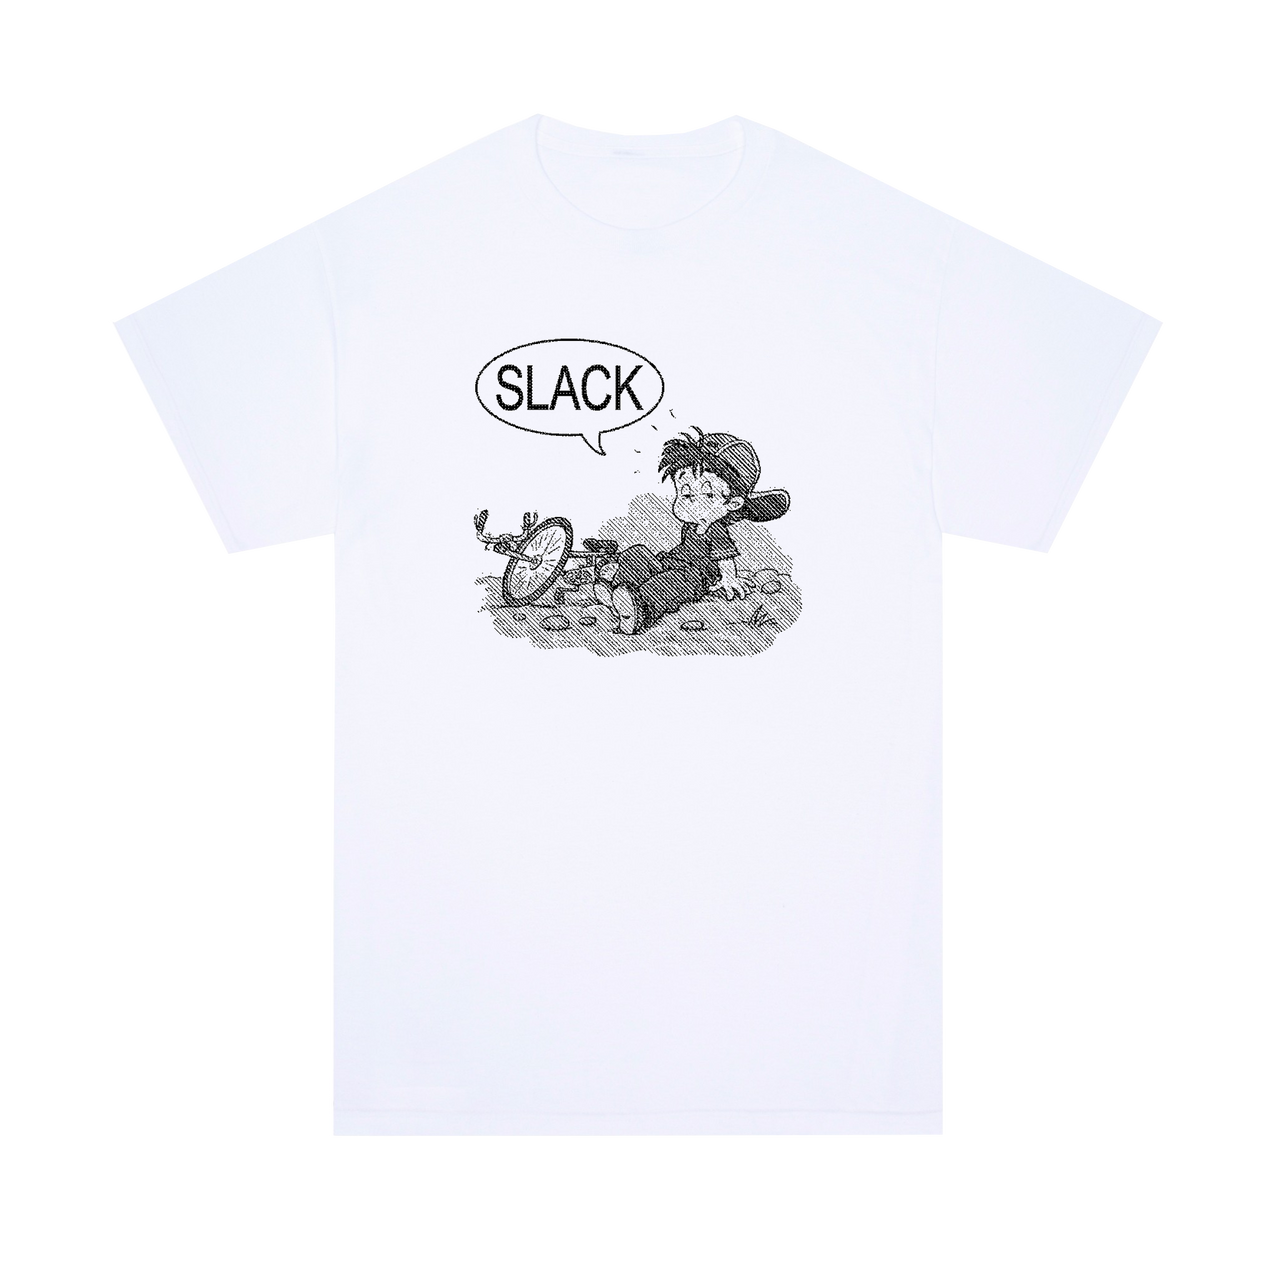 Slack "Biker" T-Shirt